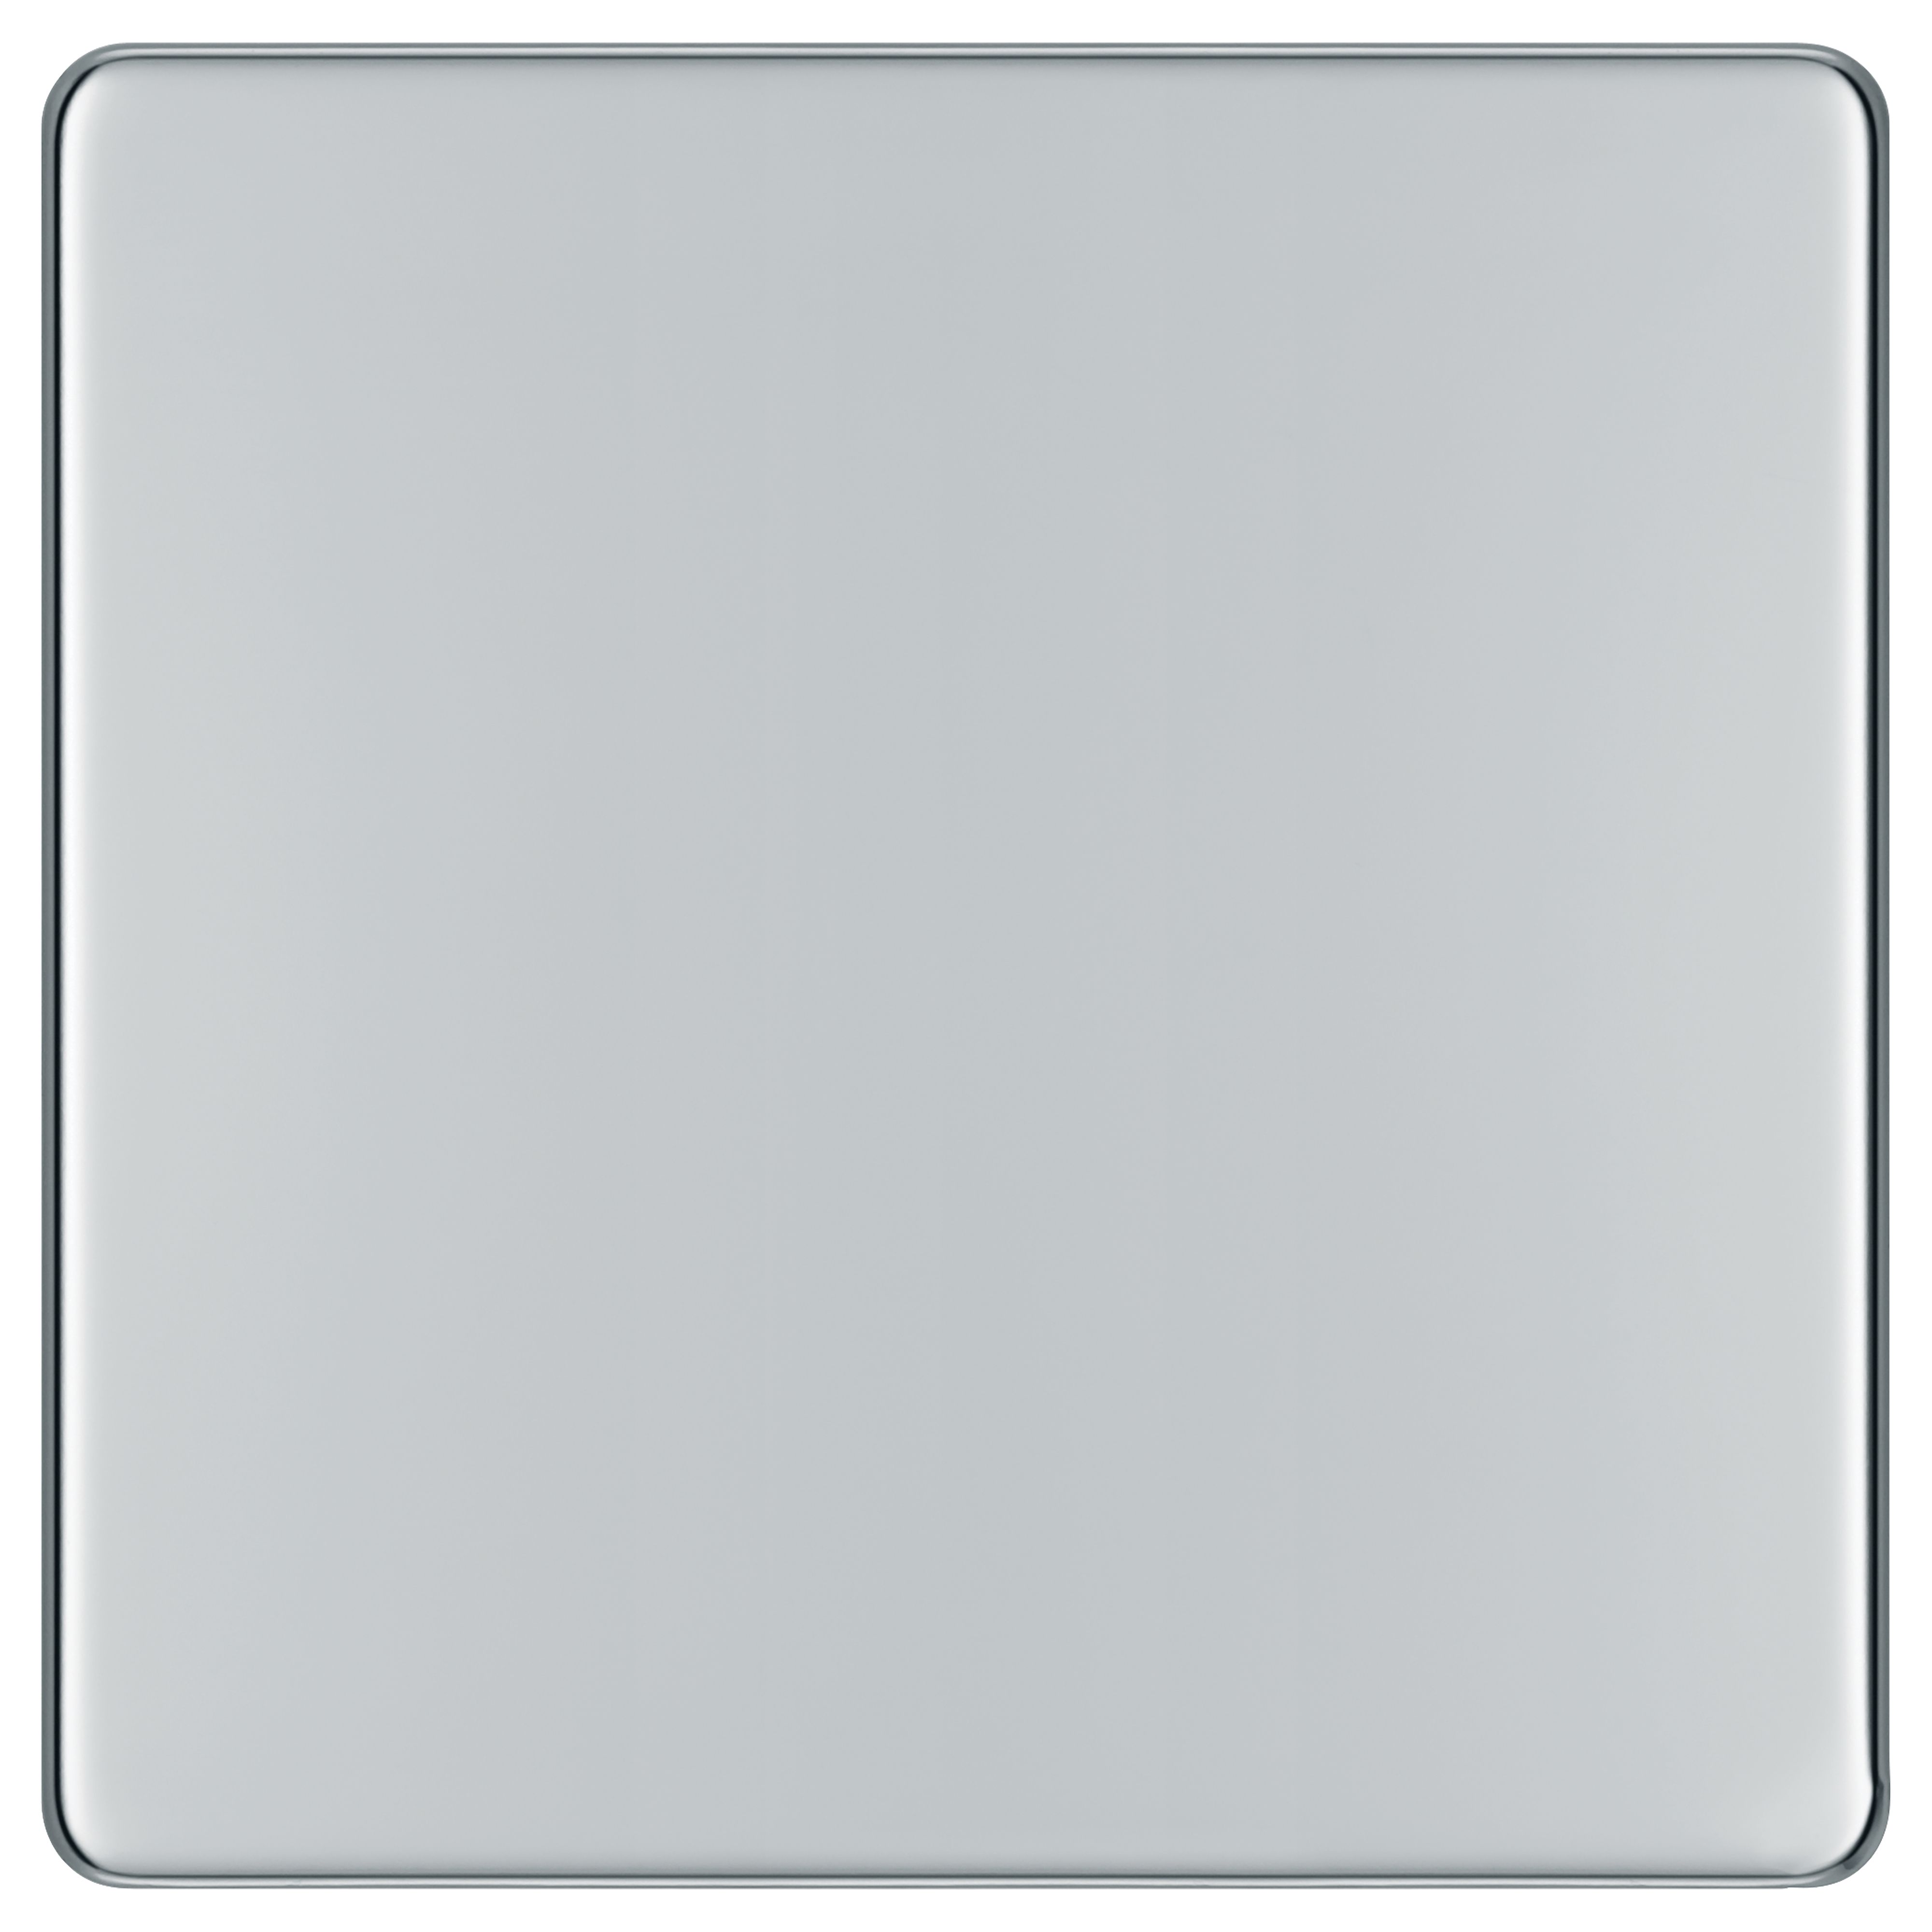 BG Screwless Flat Plate 1 Gang Blank Plate - Polished Chrome